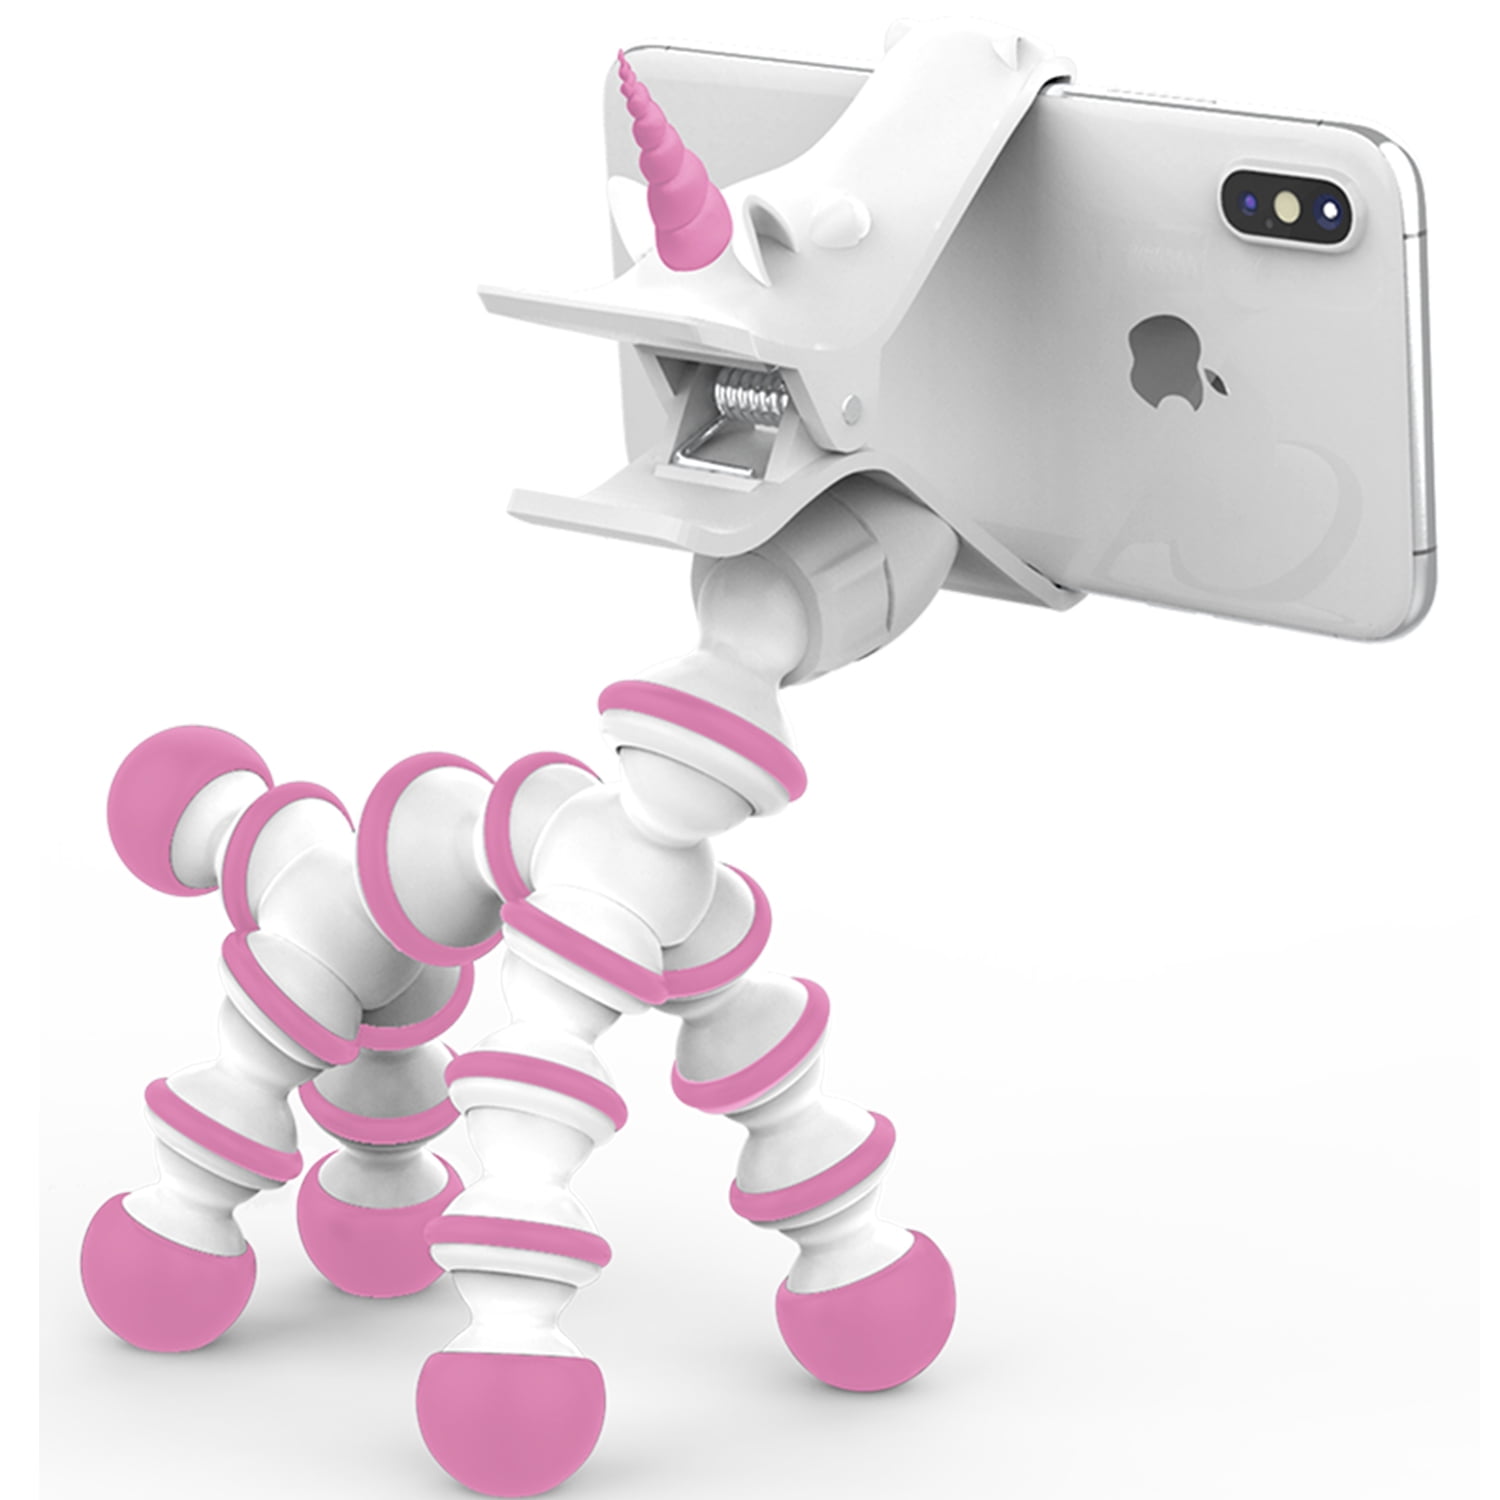 Premier Unicorn Multi-Flex Smartphone Grip Mount 